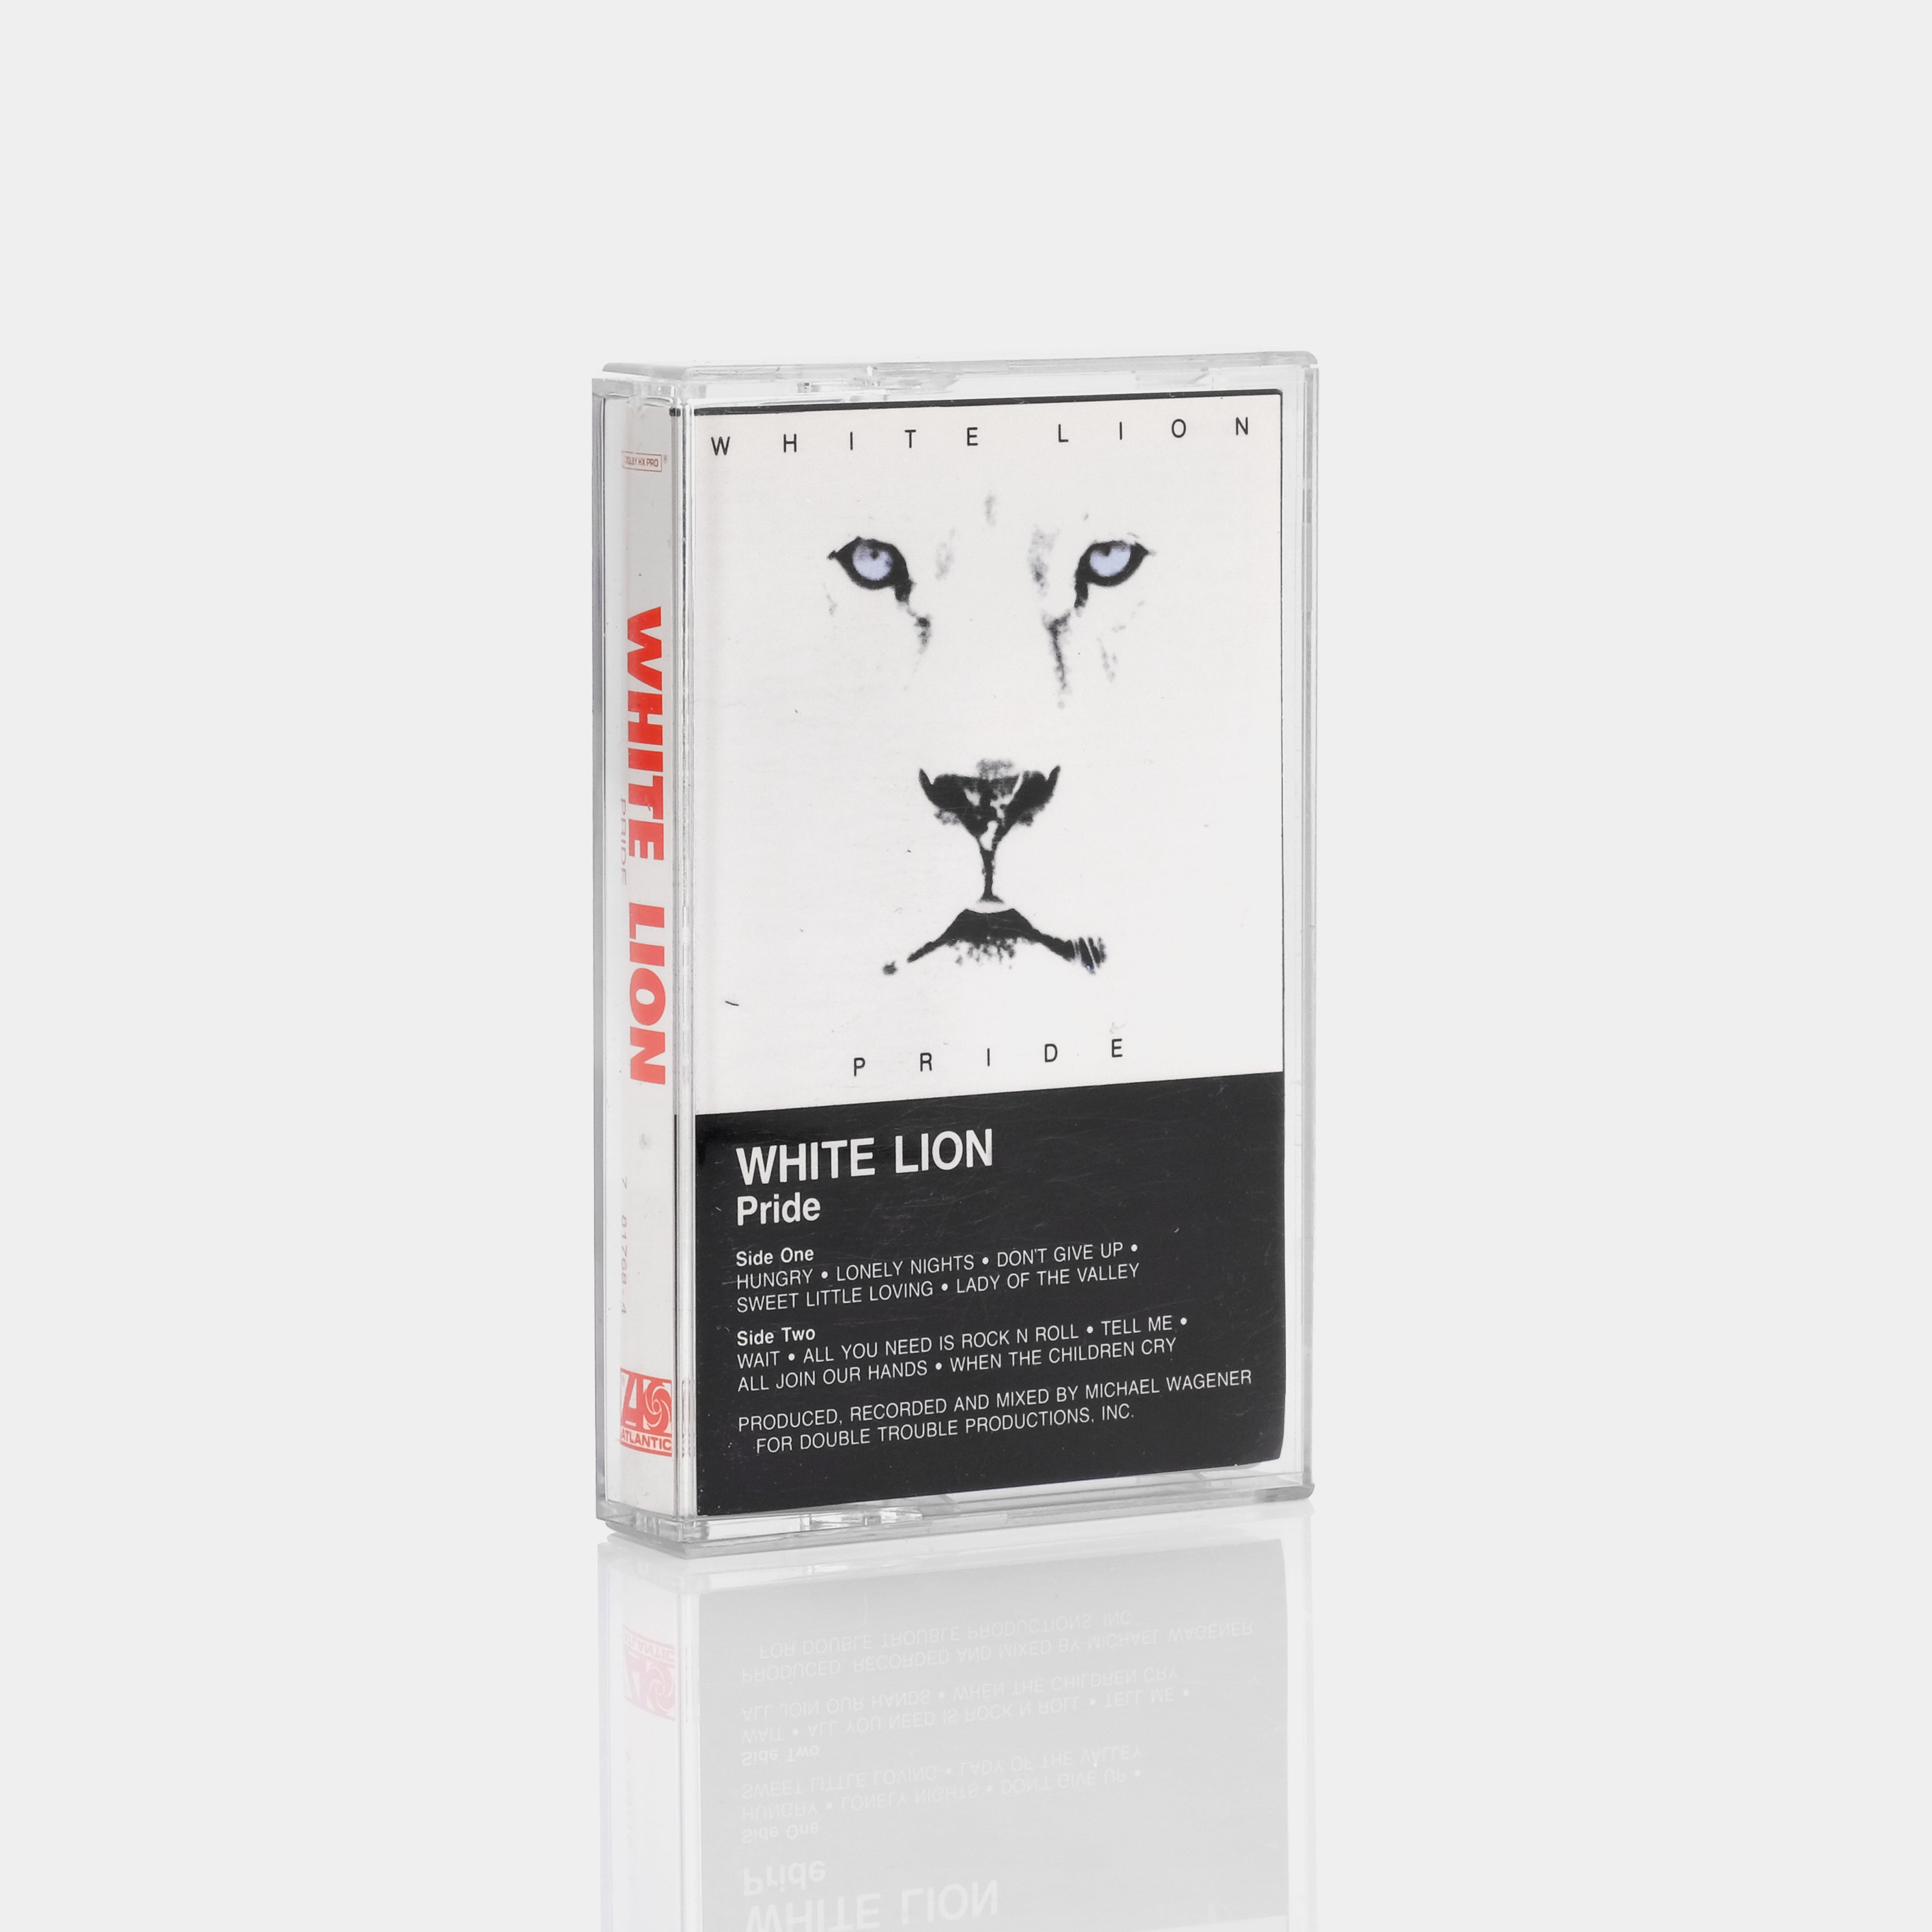 white lion pride album